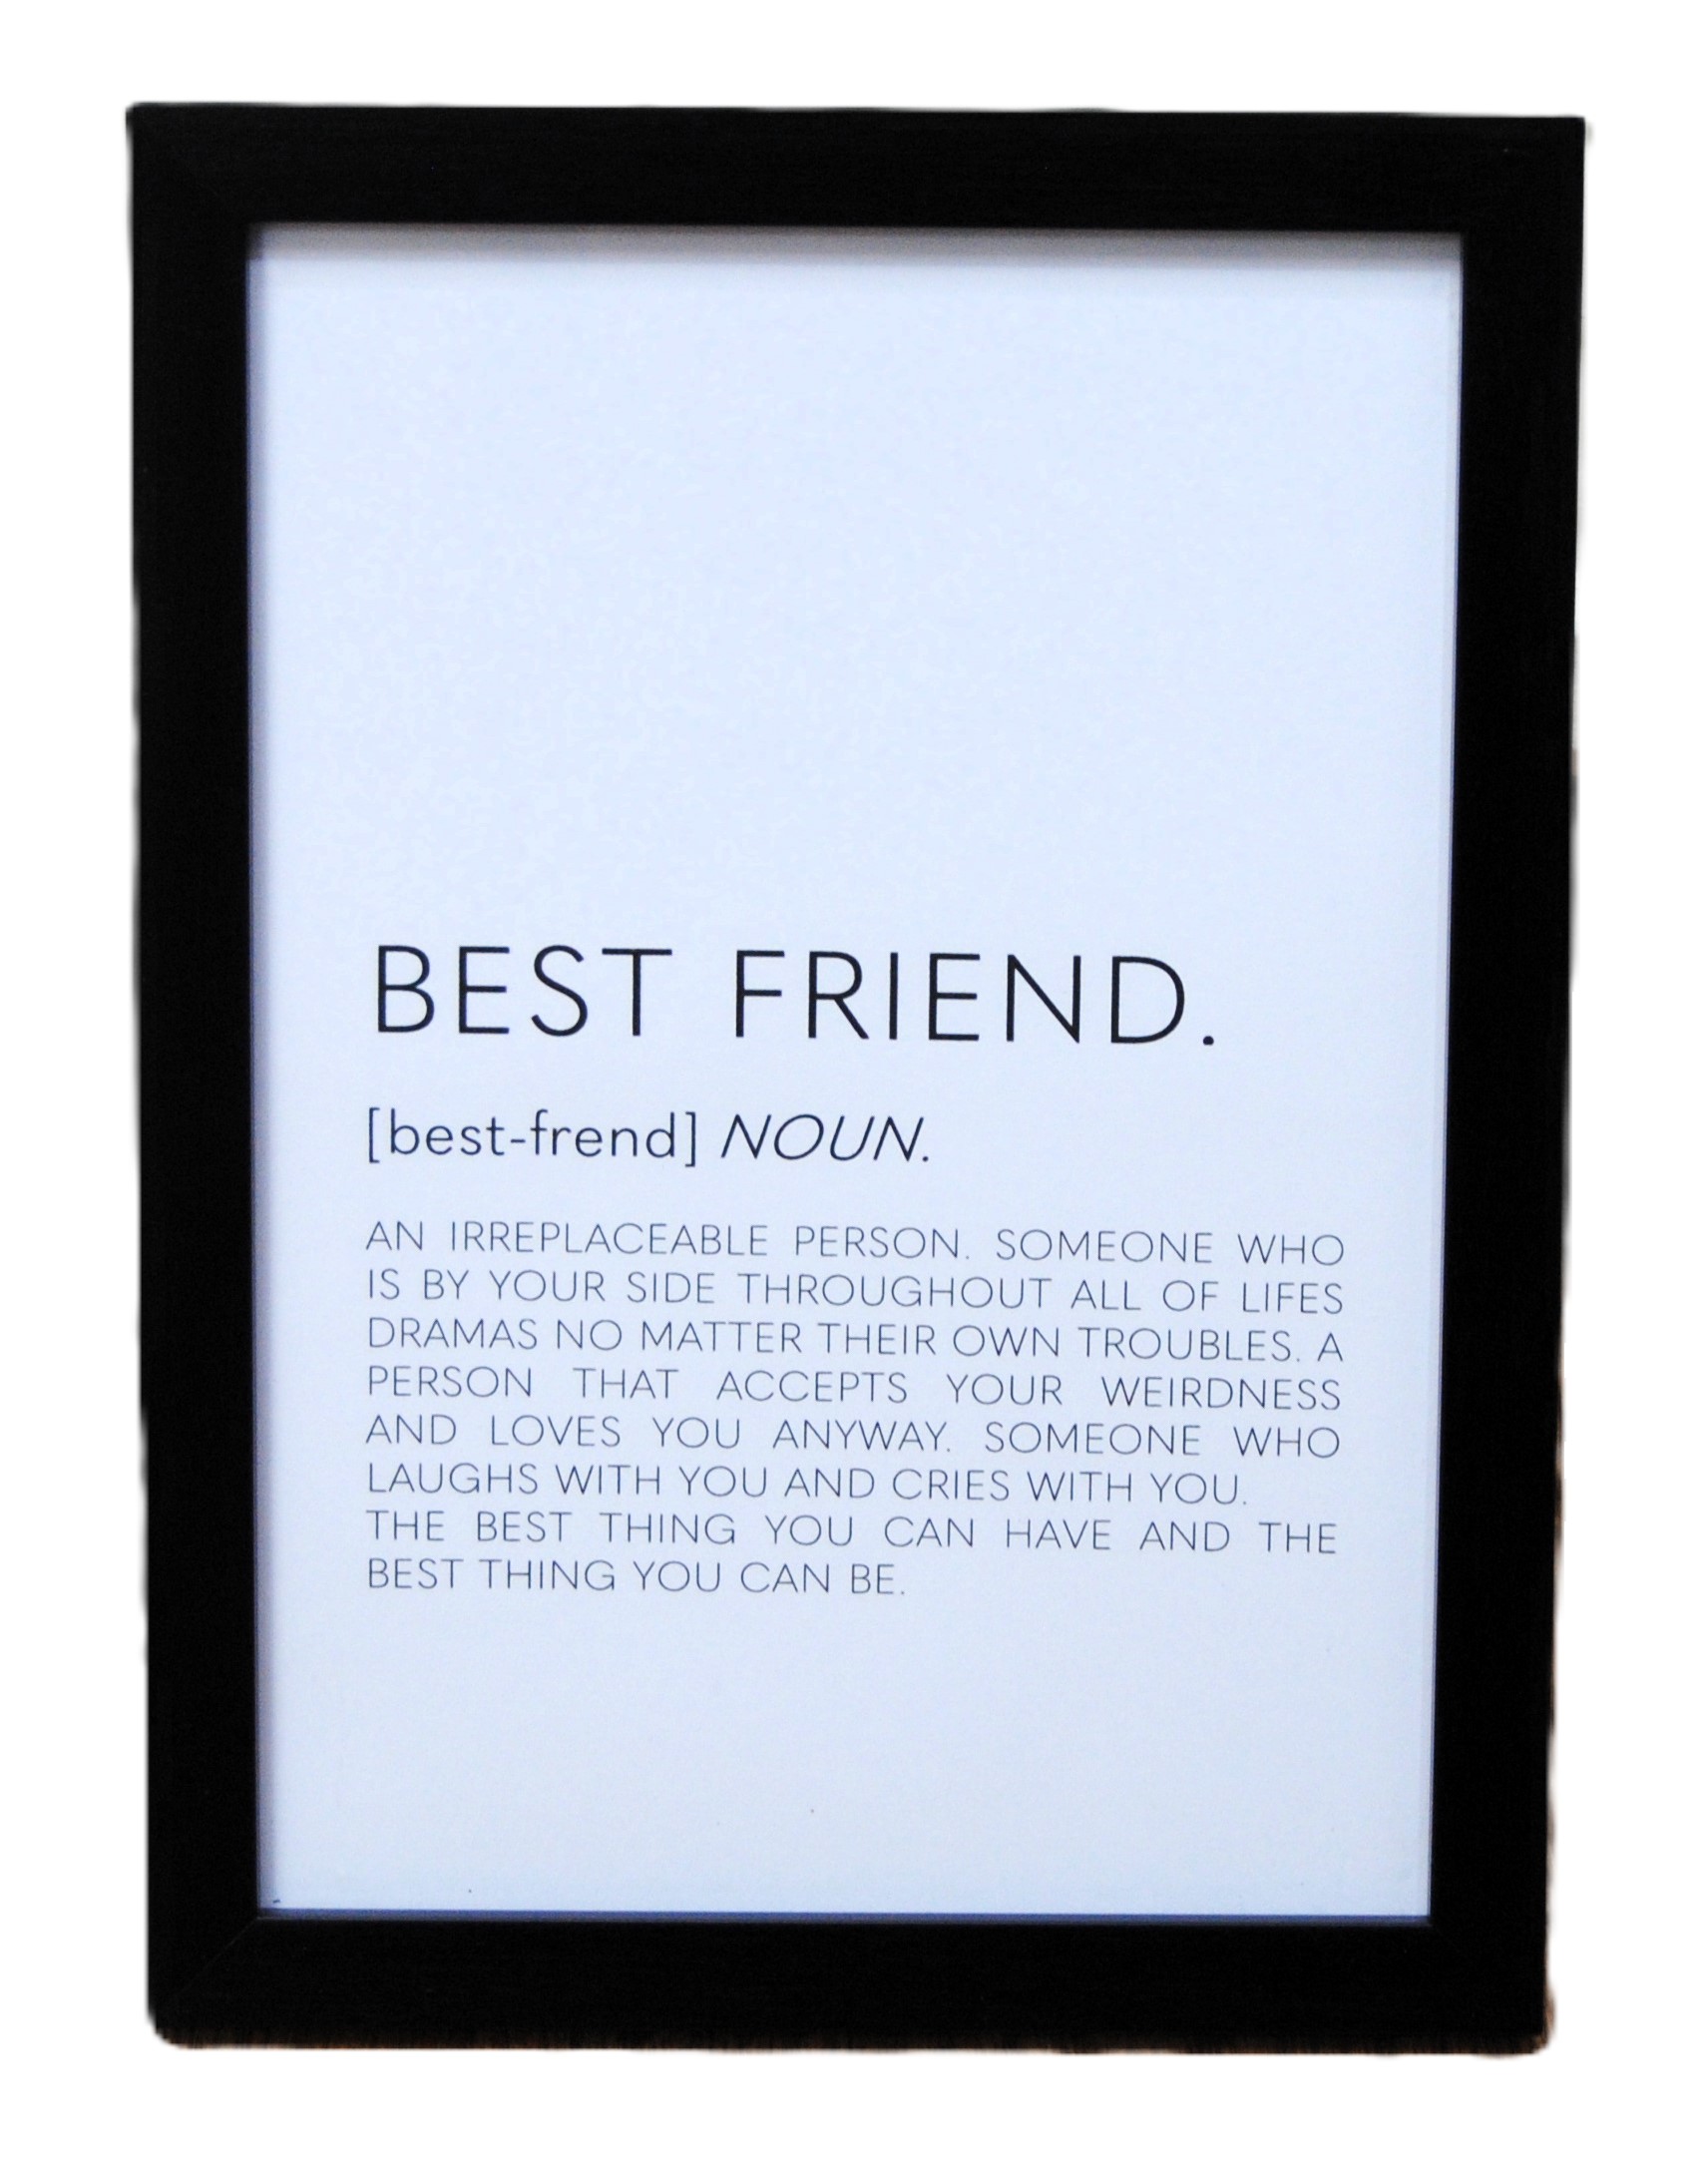 Best Friend (framed)